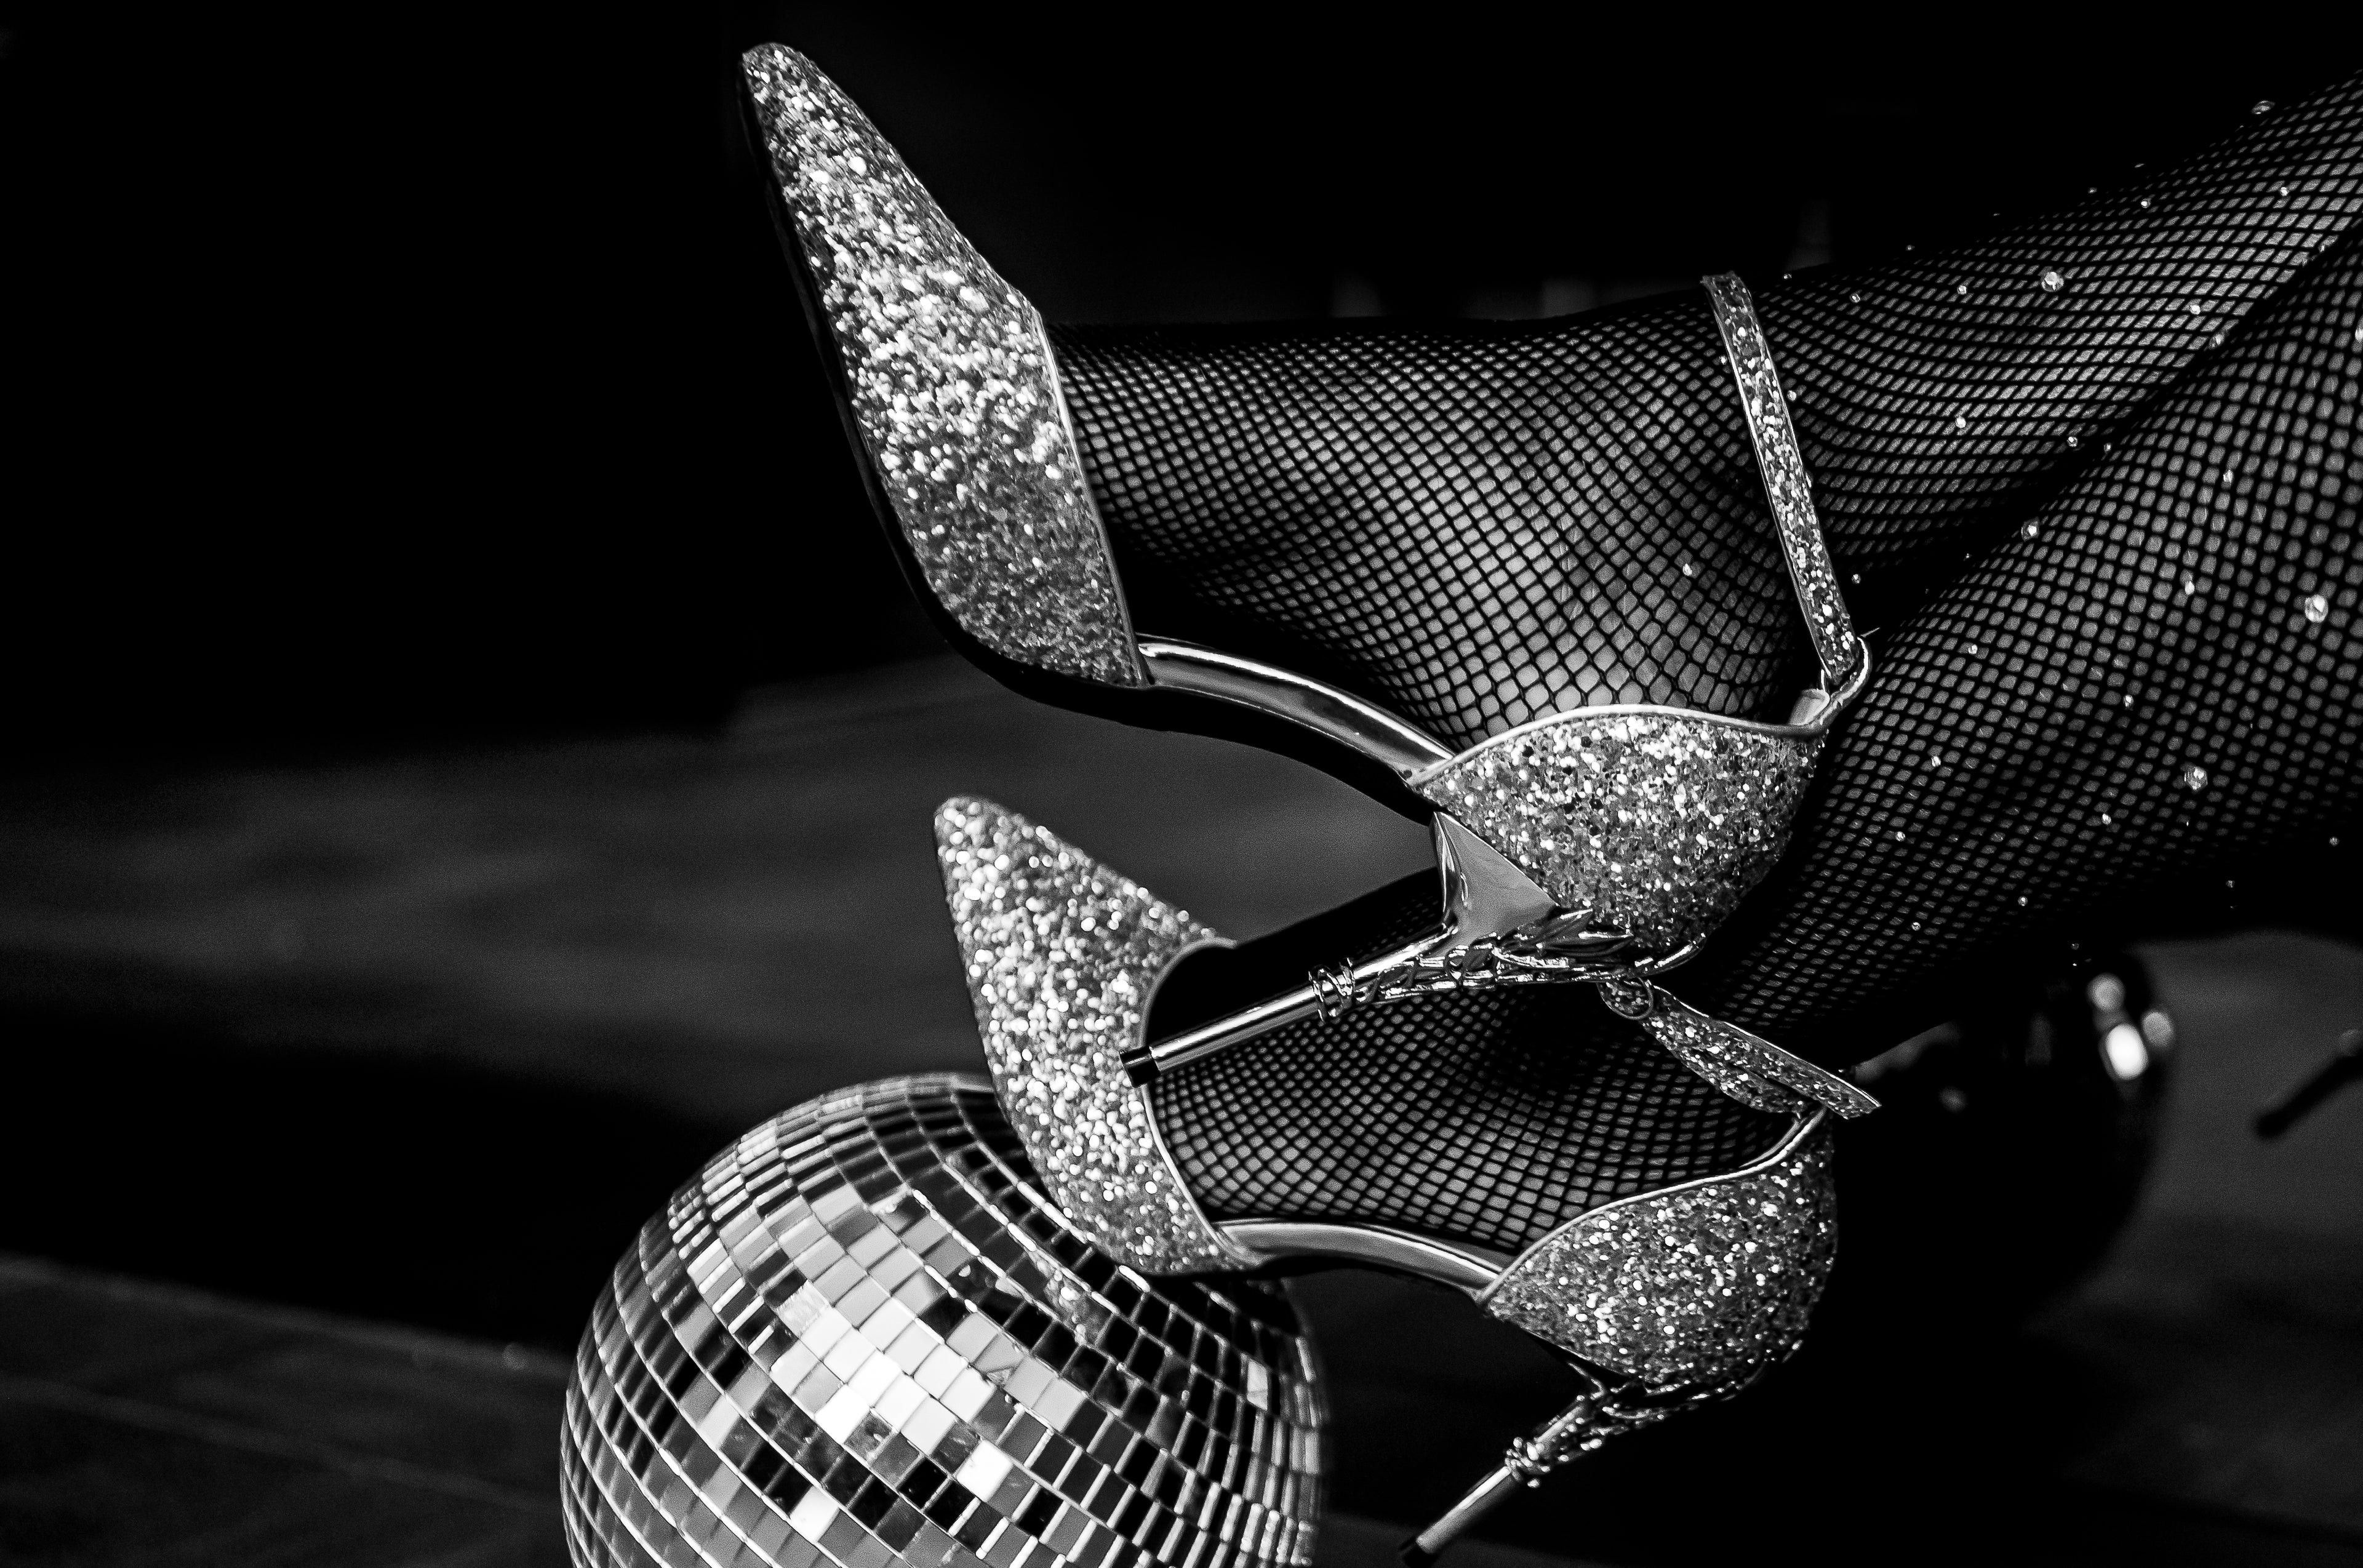 Load video: Glittery heels balancing on disco ball